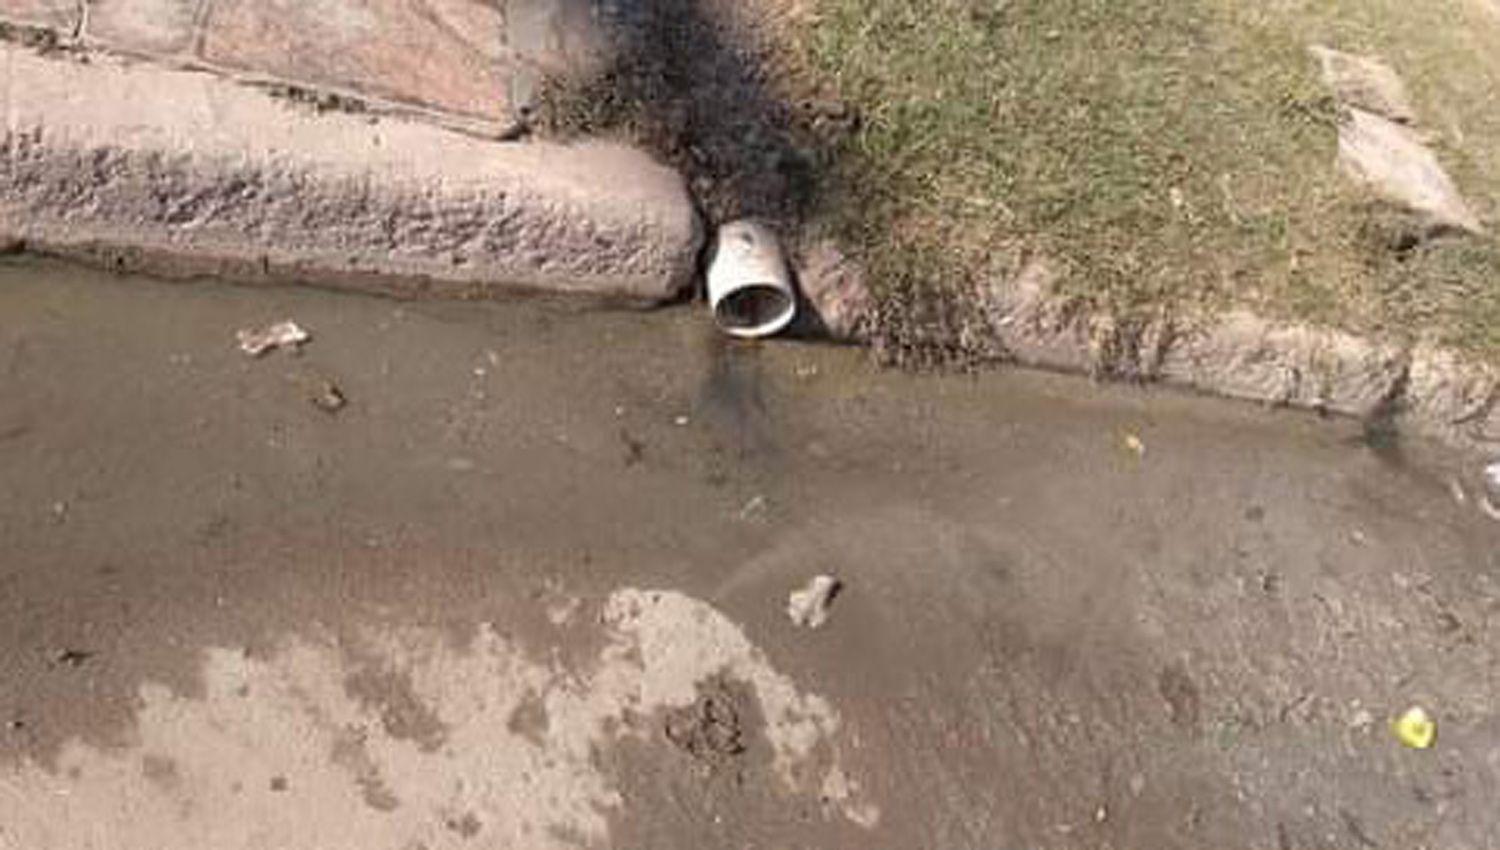 Multaraacuten a vecinos de Antildeatuya que arrojen aguas servidas a la calle